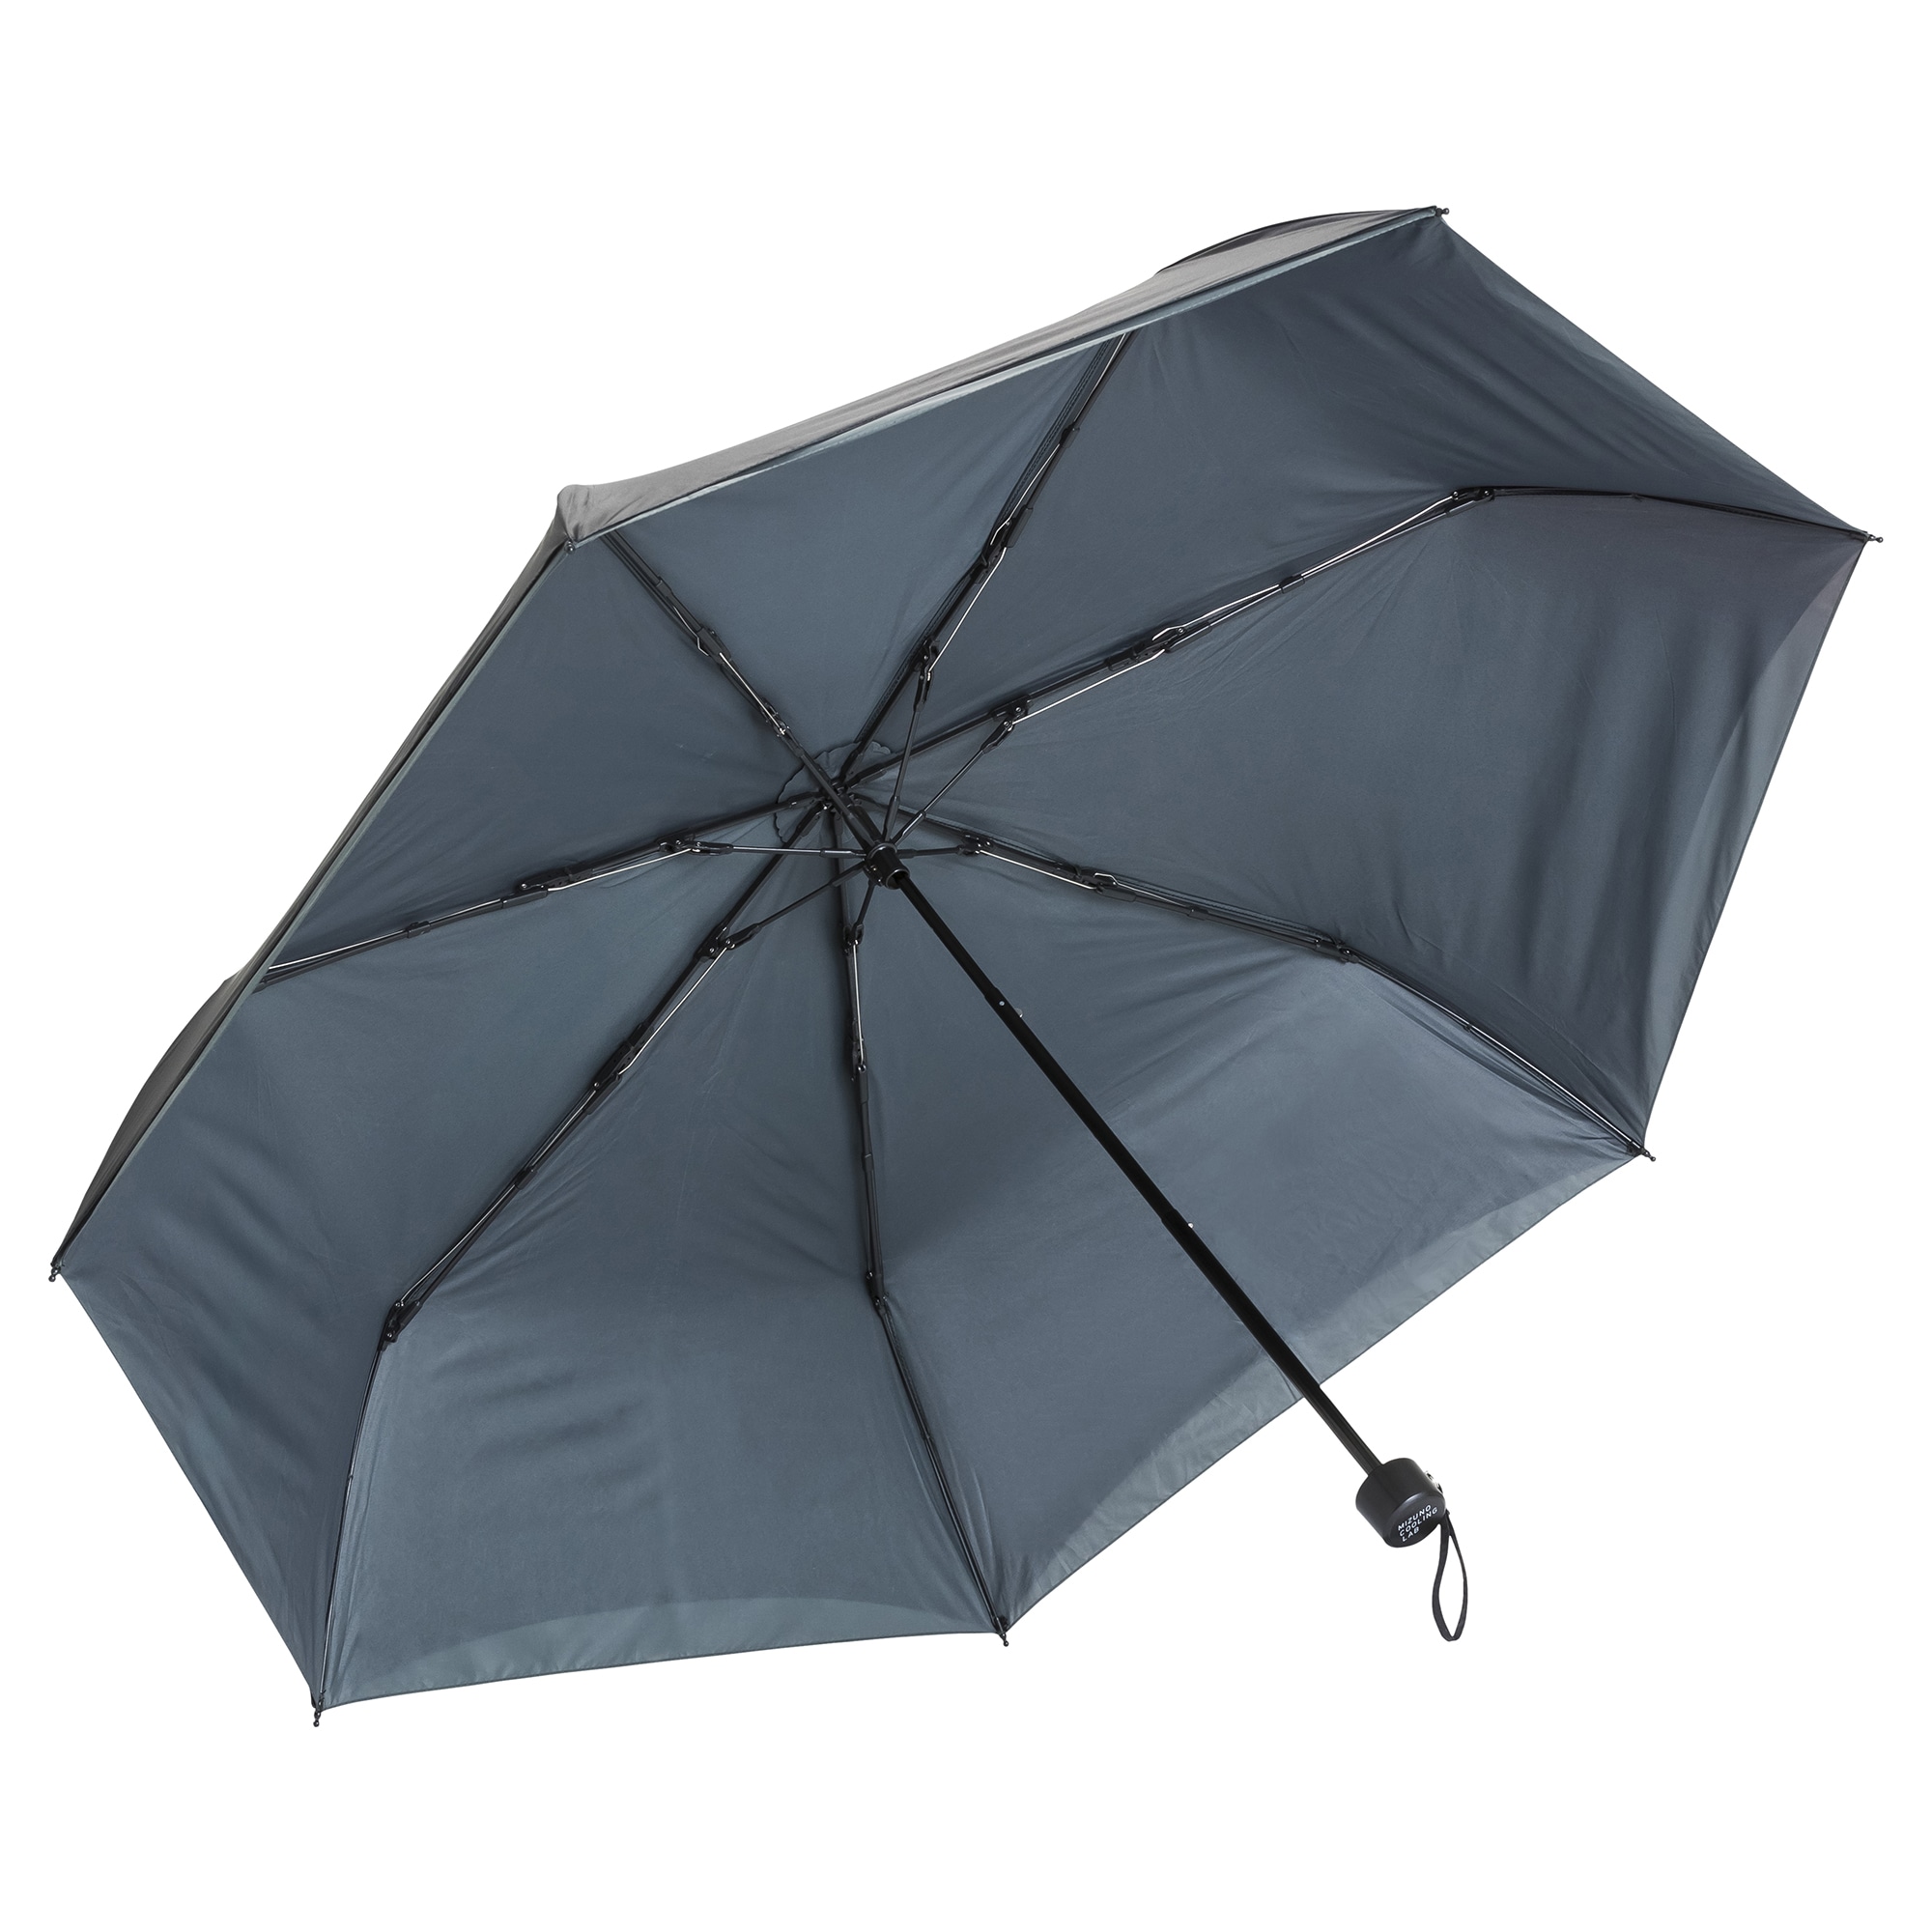 20 UMBRELLA XL【晴雨兼用傘】|C3JCL301|その他|健康・日常生活品 